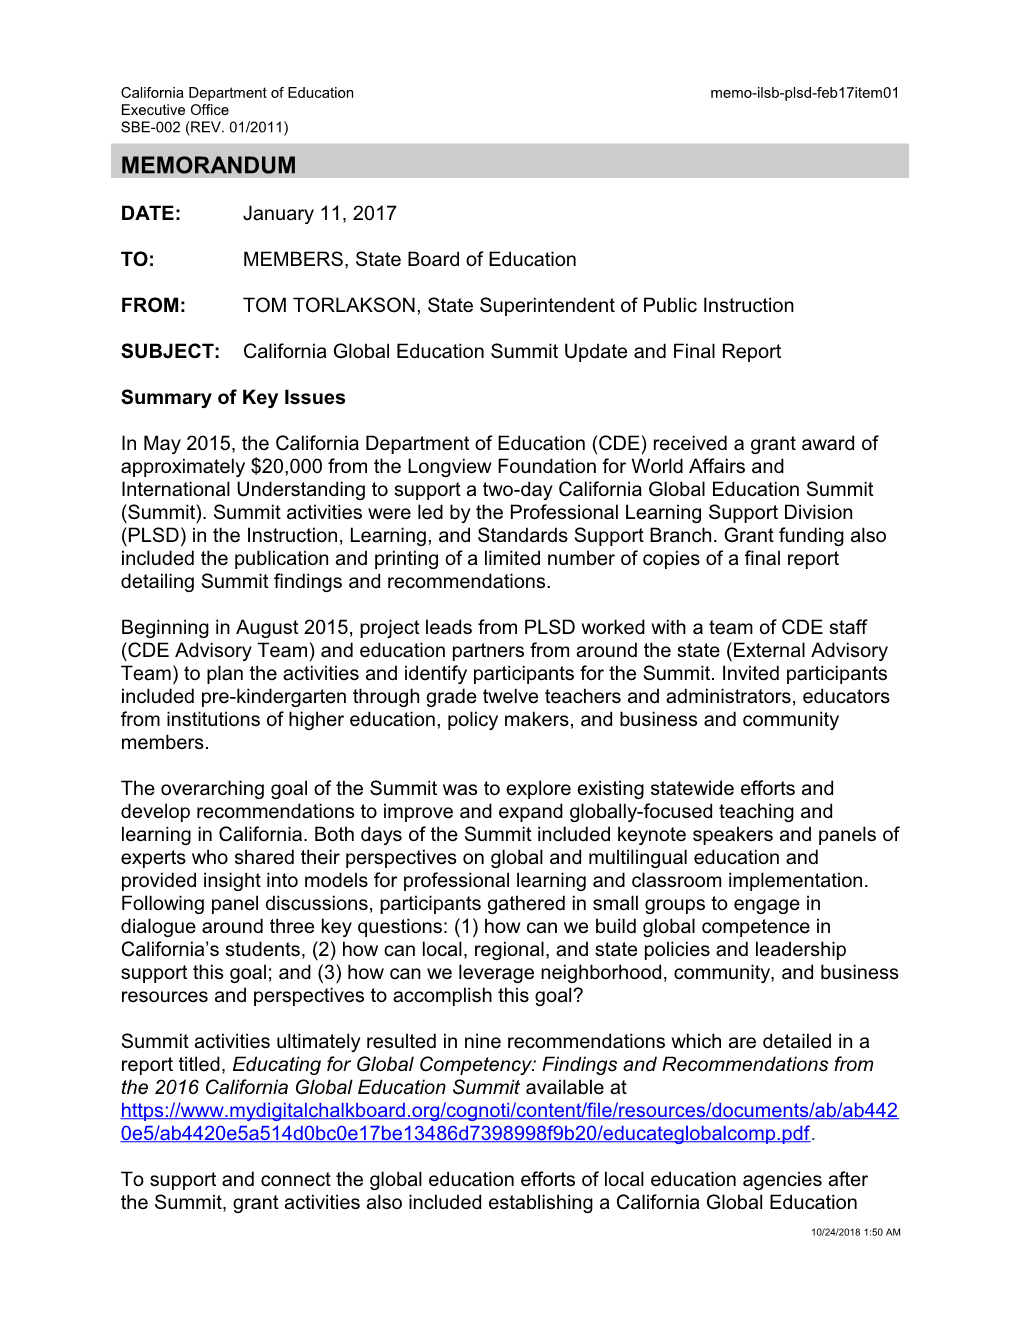 February 2017 Memorandum PLSD Item 01 - Information Memorandum (CA State Board of Education)